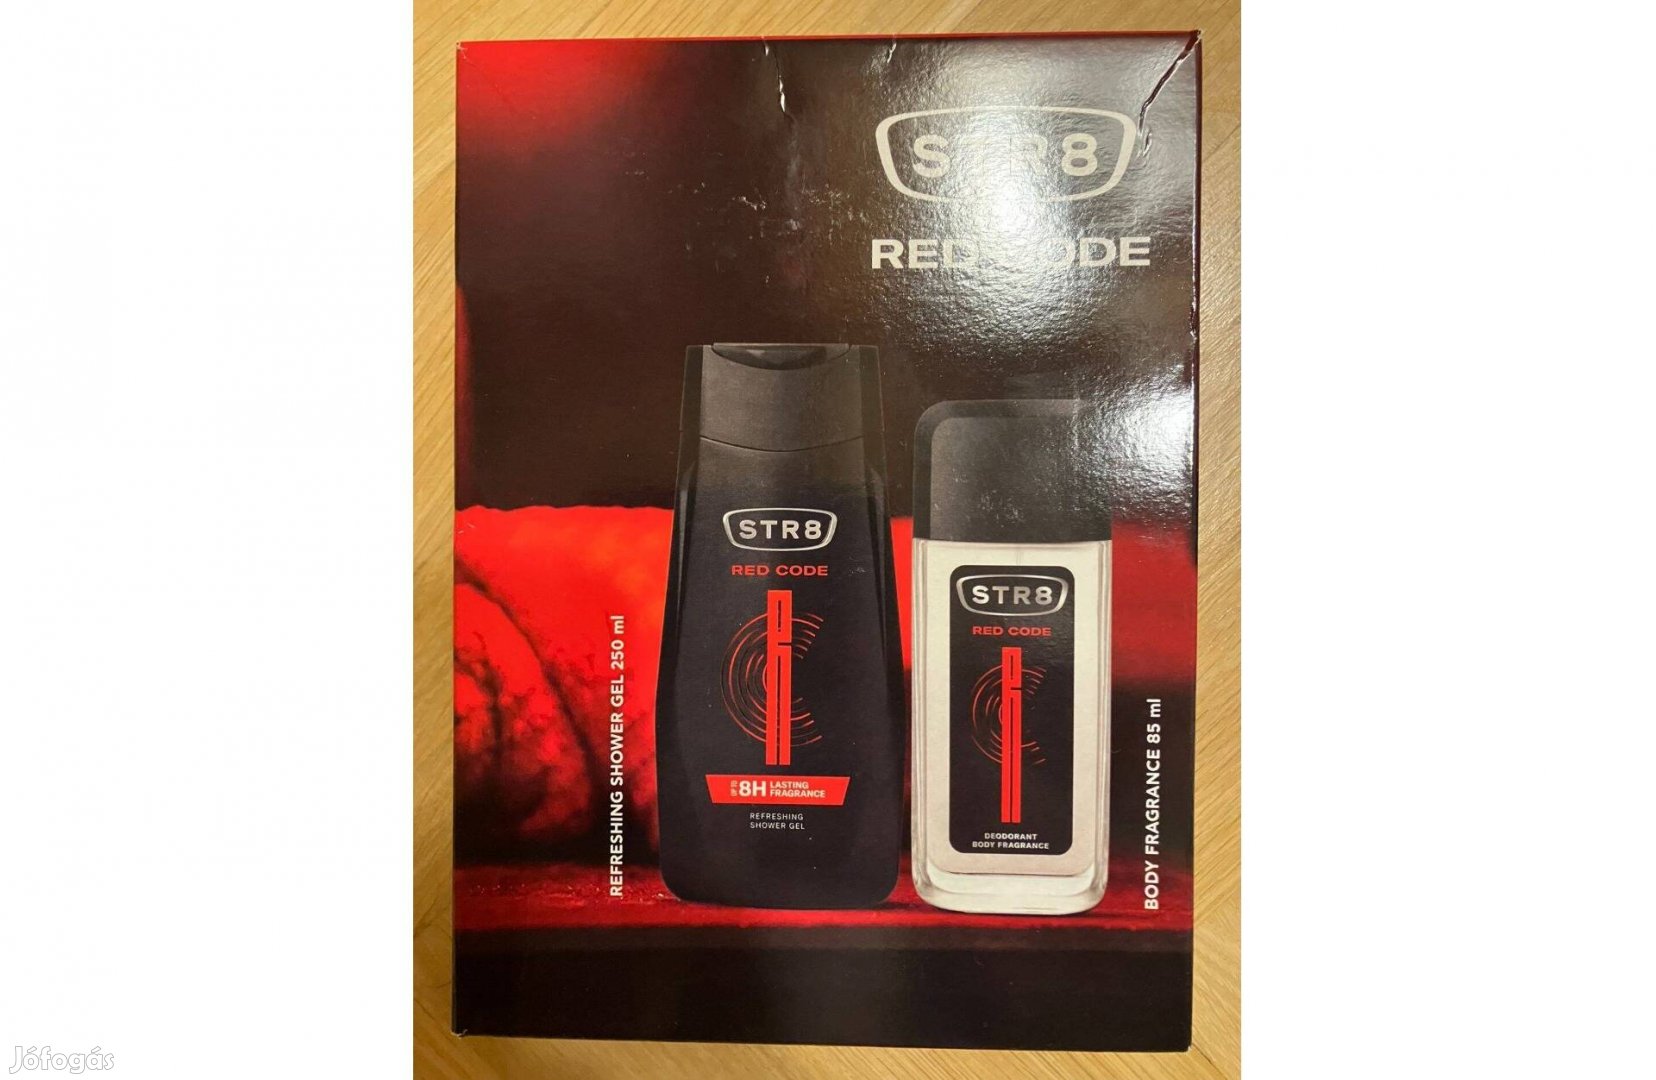 STR8 Red Code ajándékcsomag